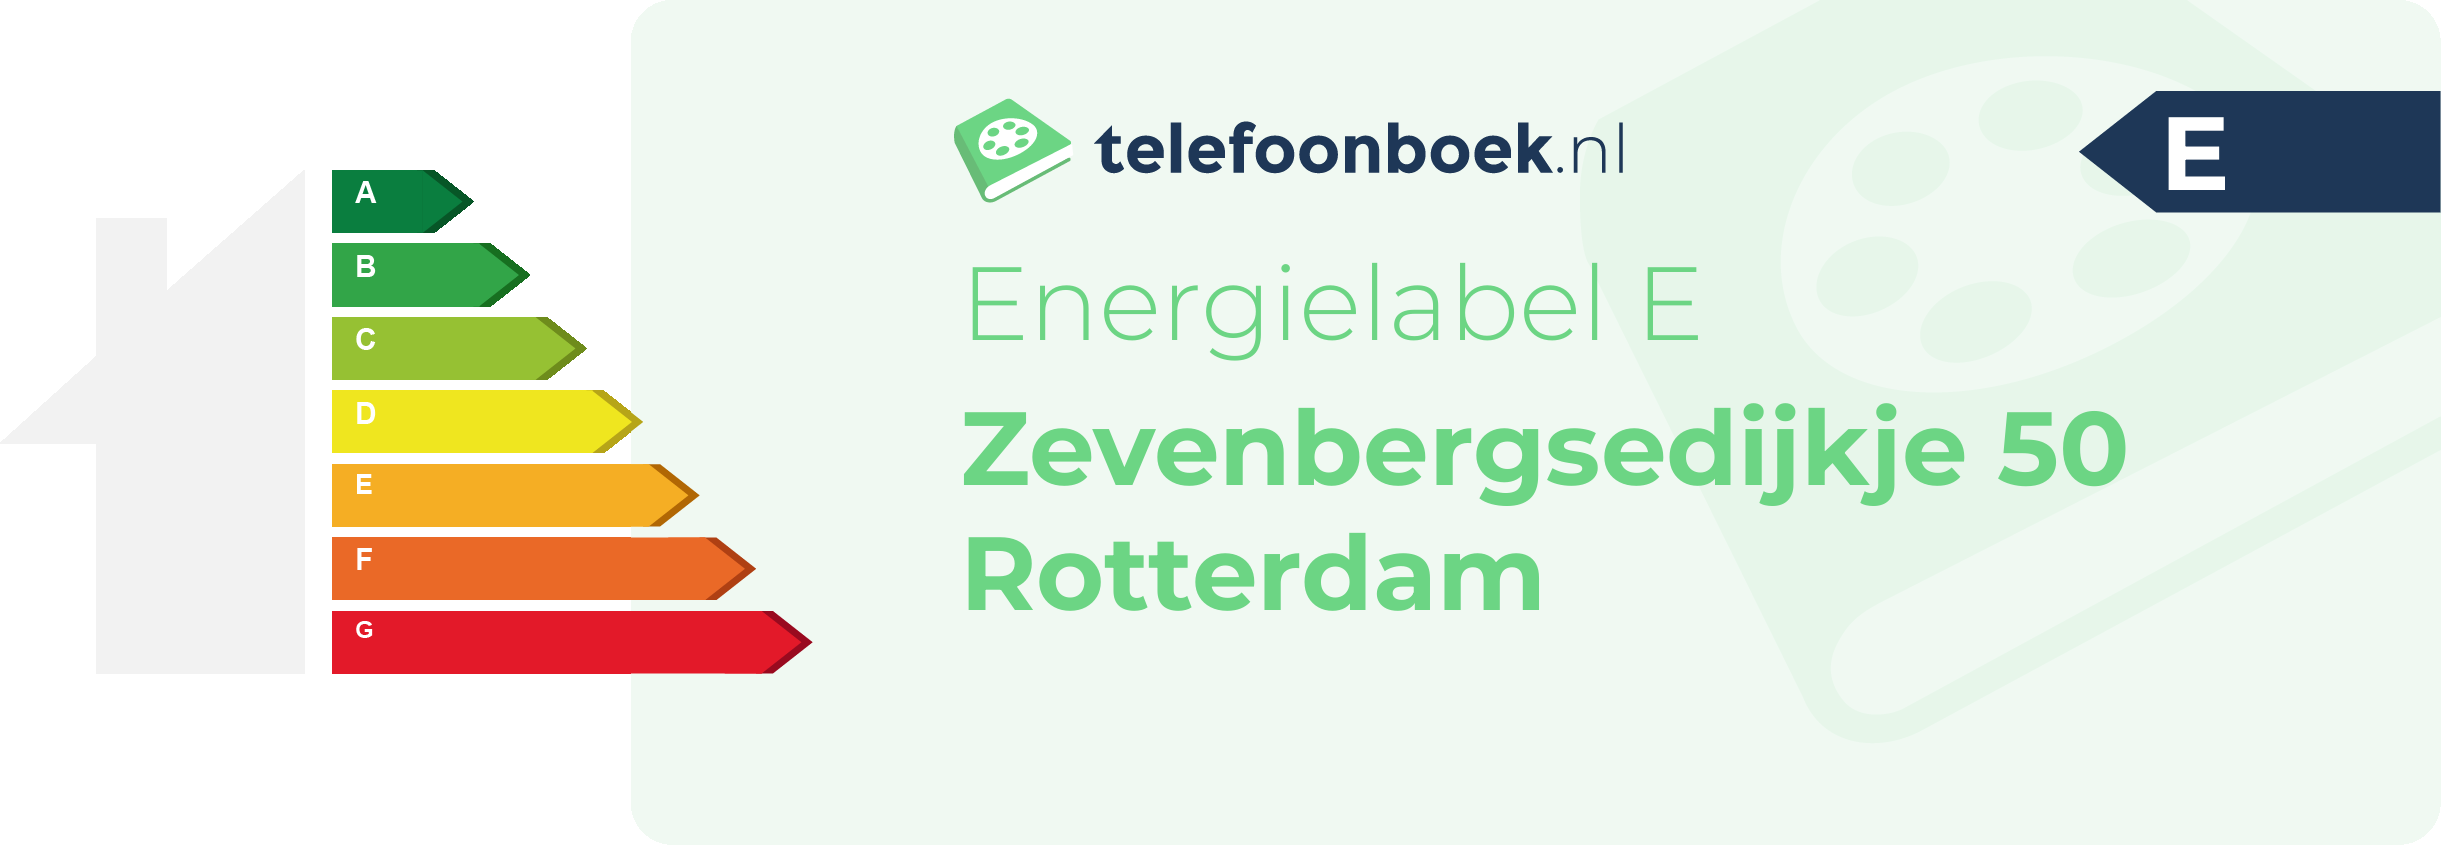 Energielabel Zevenbergsedijkje 50 Rotterdam